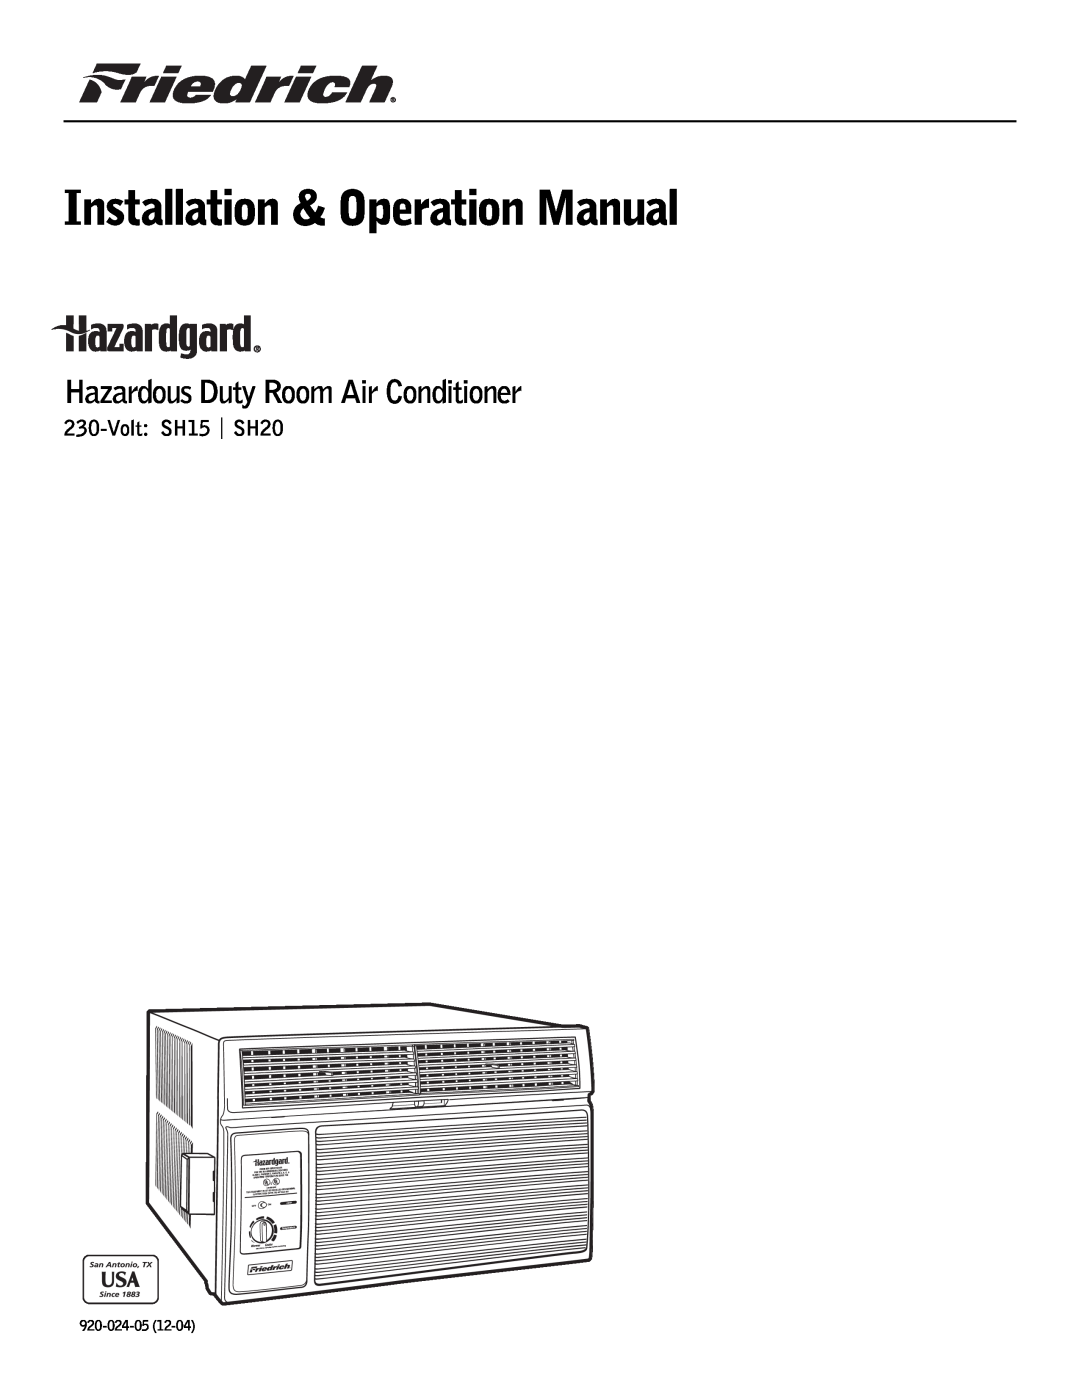 Friedrich operation manual Hazardous Duty Room Air Conditioner, Volt:SH15 | SH20, 920-024-05 